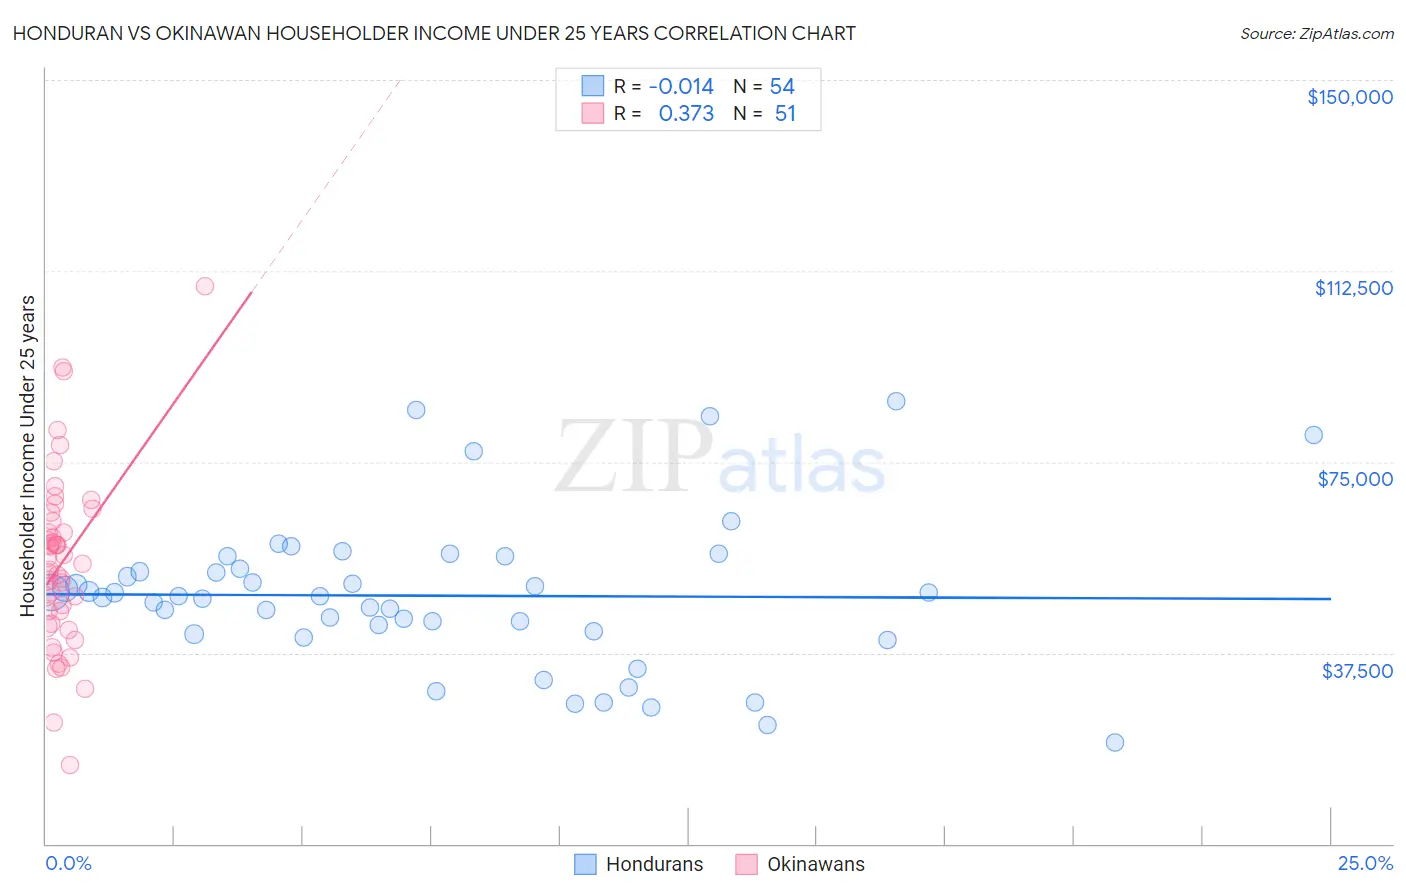 Honduran vs Okinawan Householder Income Under 25 years